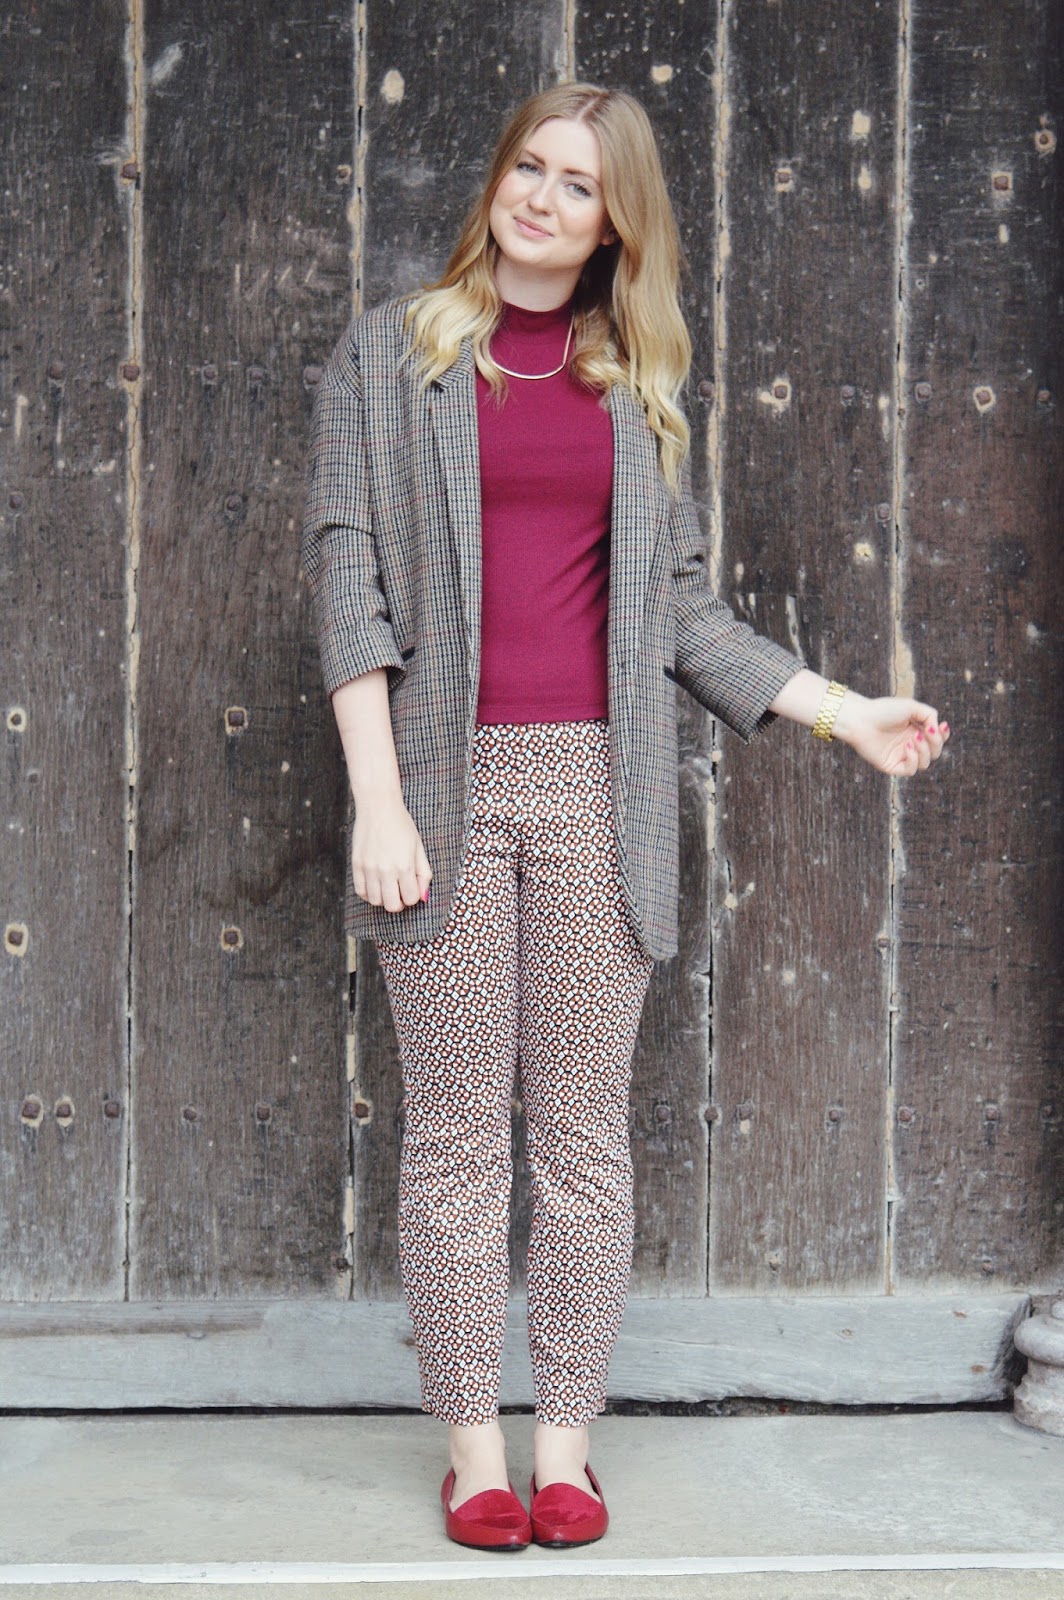 H&M printed trousers, FashionFake, fashion bloggers, Autumn fashion lookbook